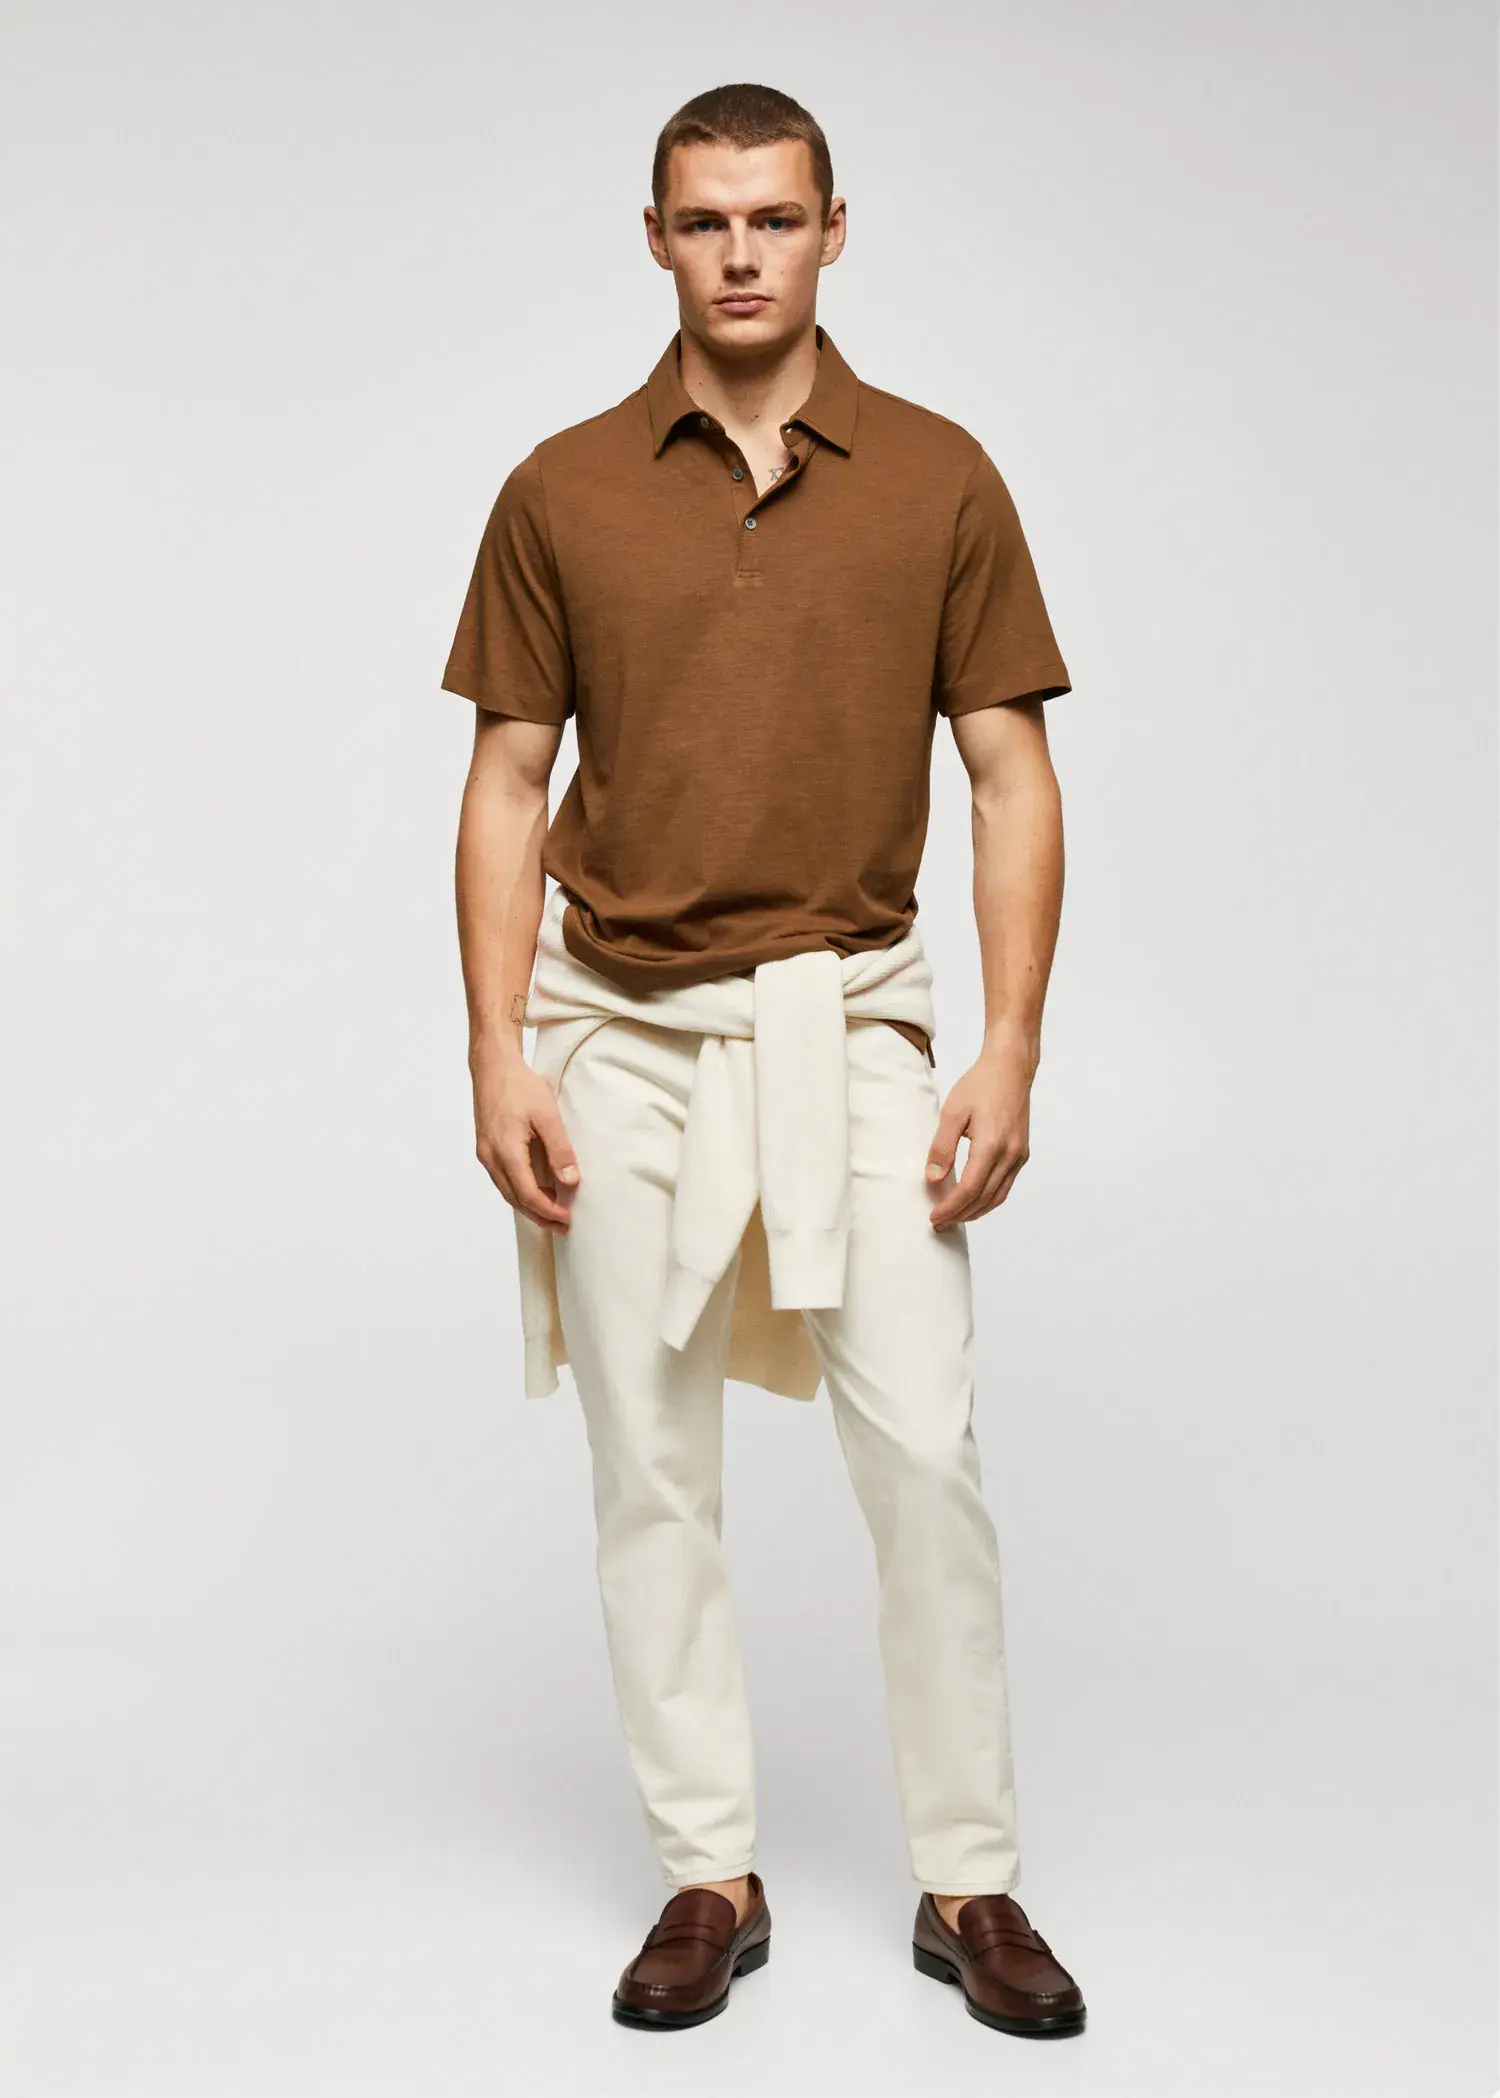 Mango 100% cotton basic polo shirt . a man in a brown polo shirt and white pants. 